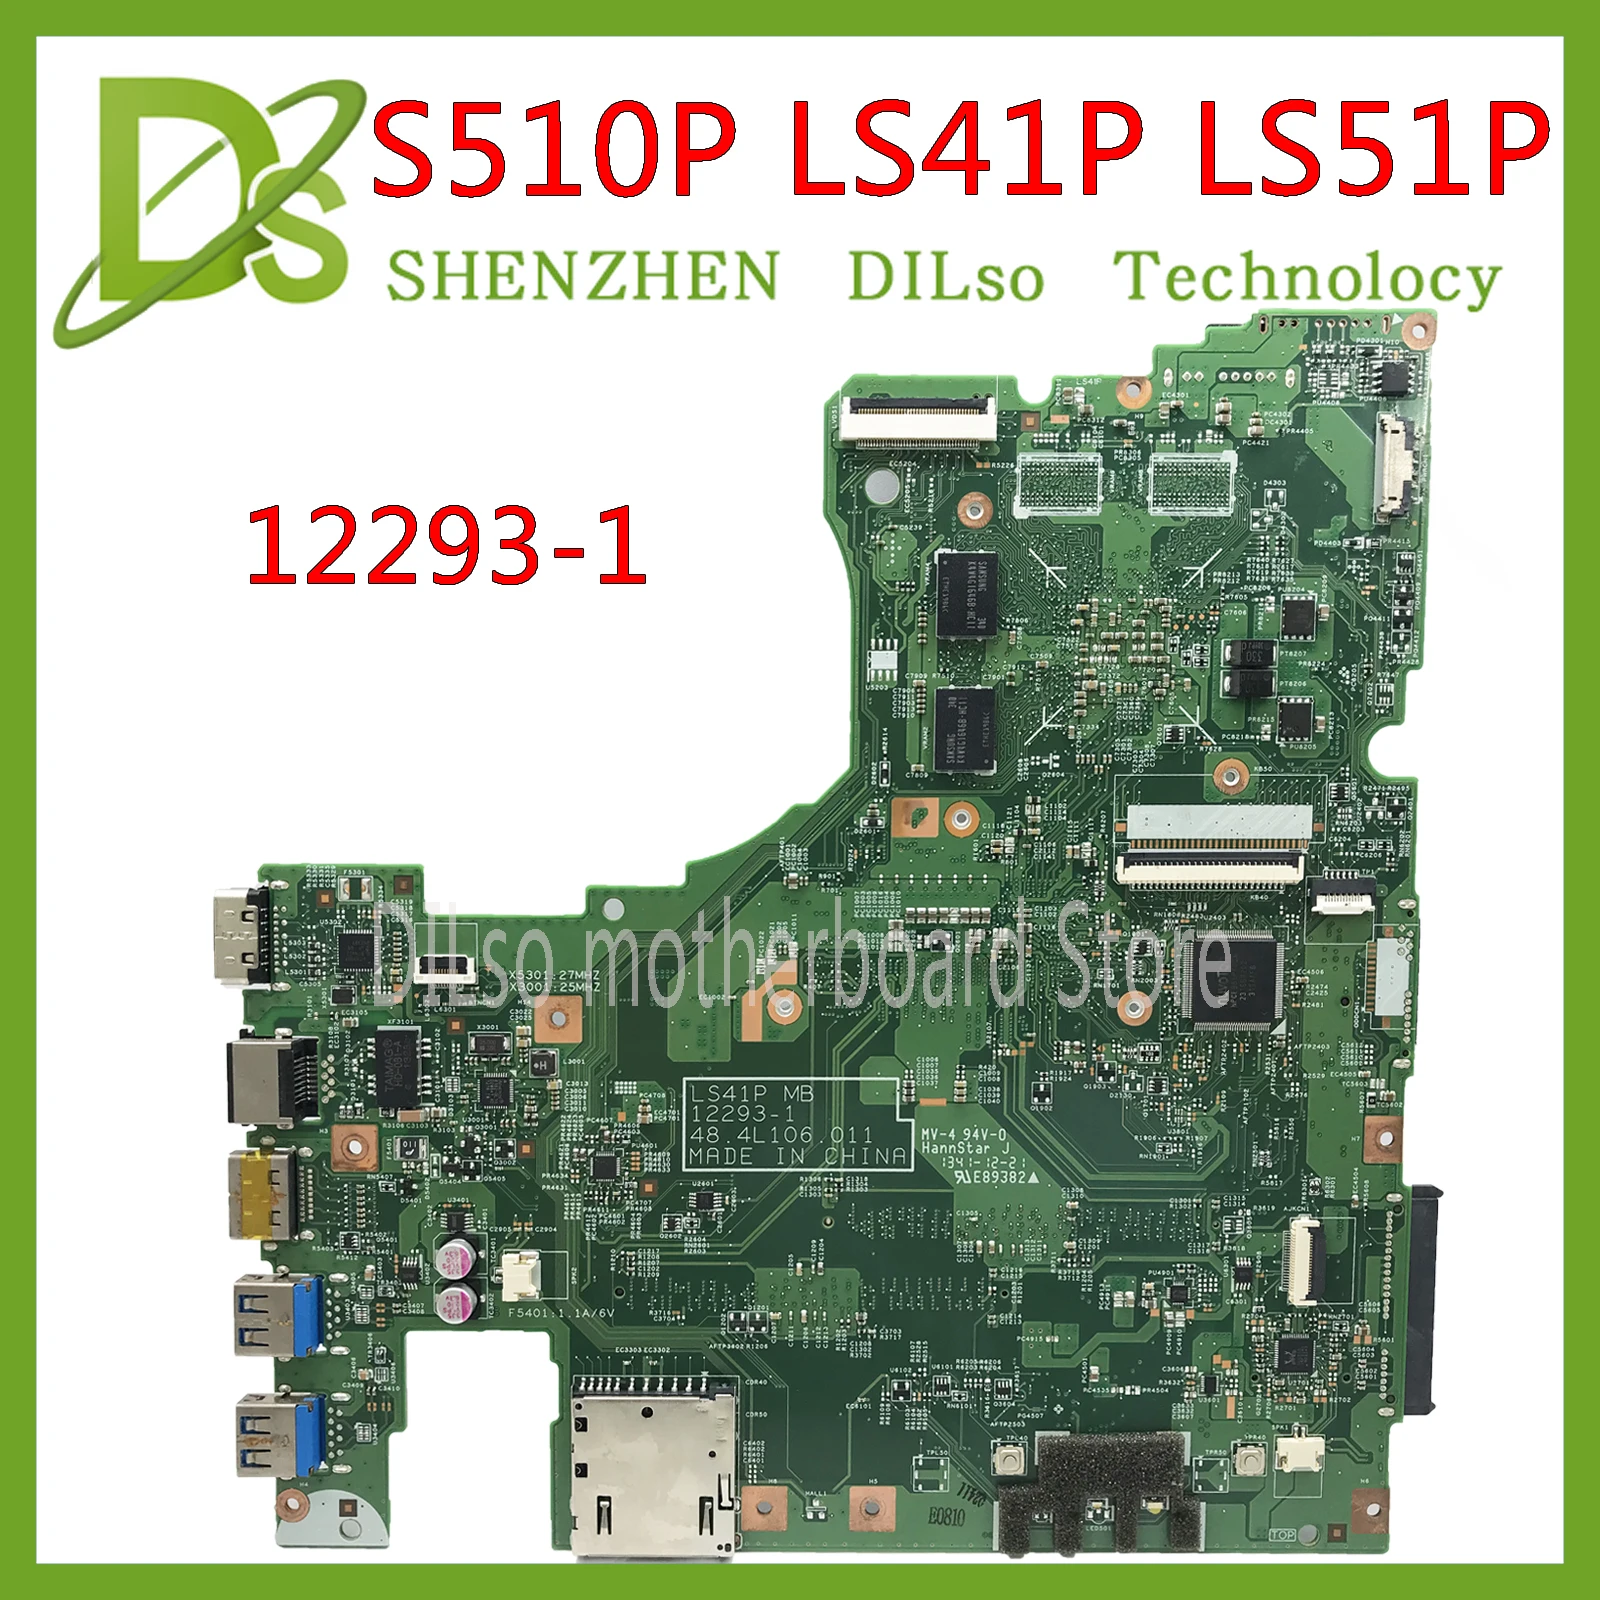 Blog  KEFU 12293-1 48.4L106.011 motherboard for Lenovo S510P LS41P LS51P motherboard I5-4200U CPU GT720M-